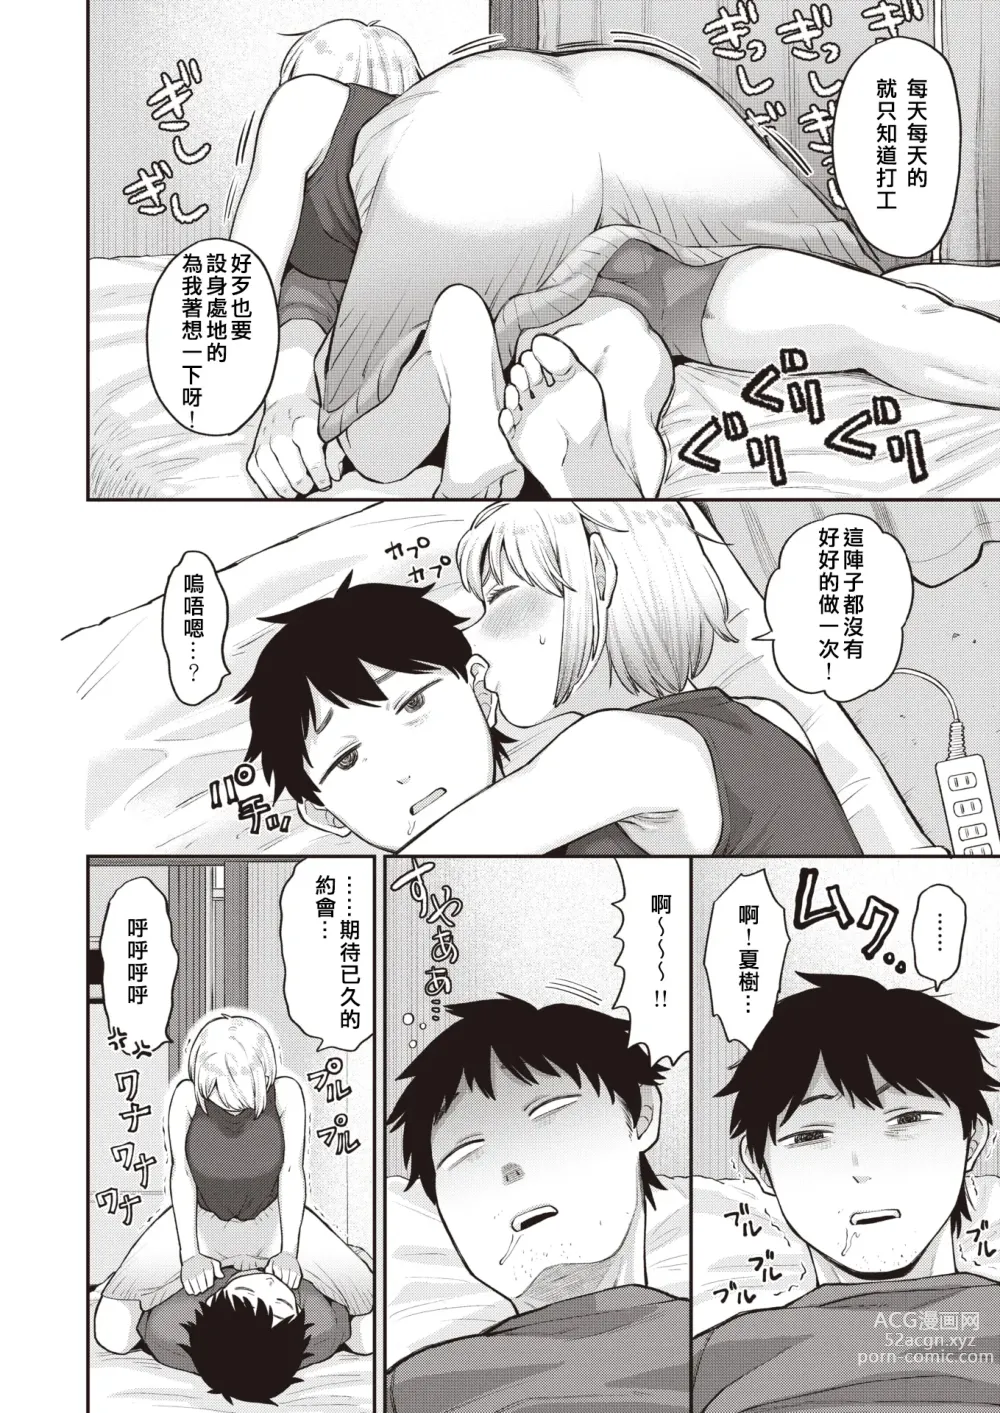 Page 4 of manga Okitetteba!